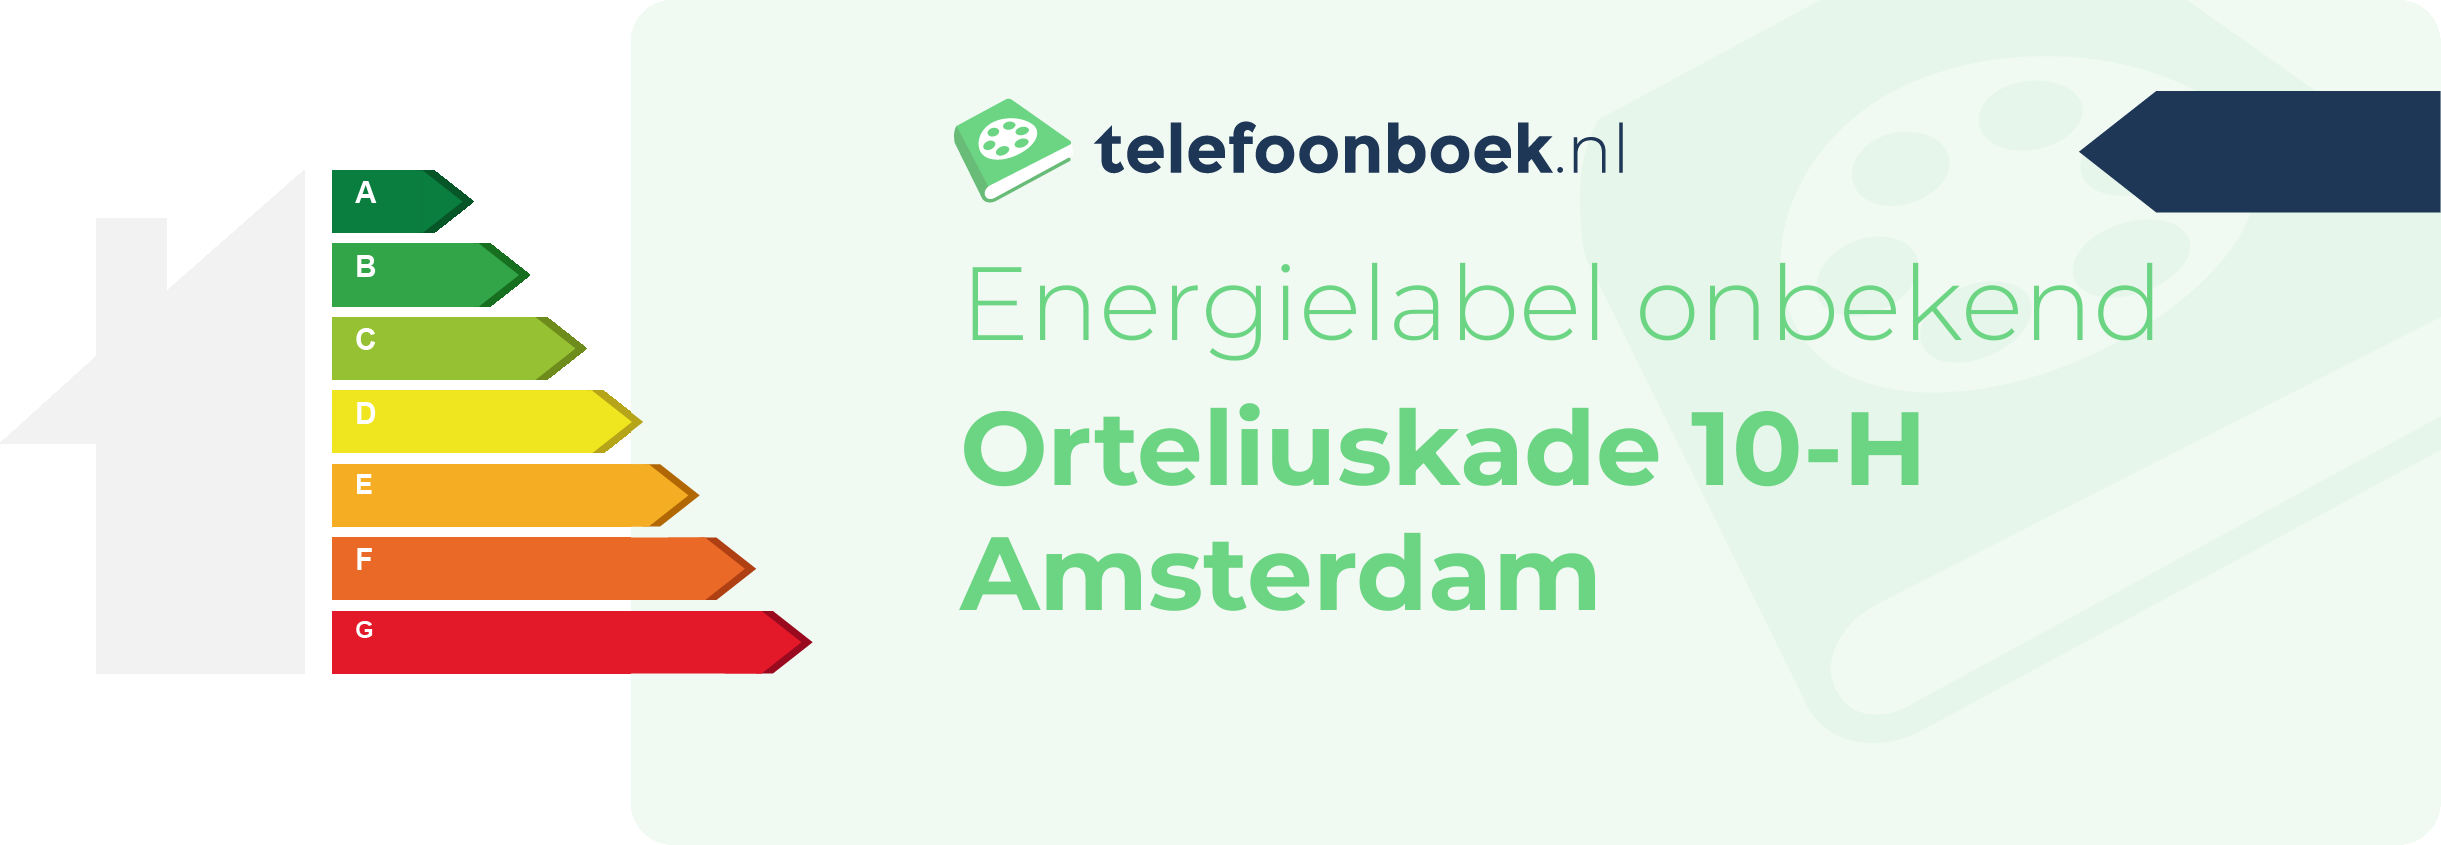 Energielabel Orteliuskade 10-H Amsterdam